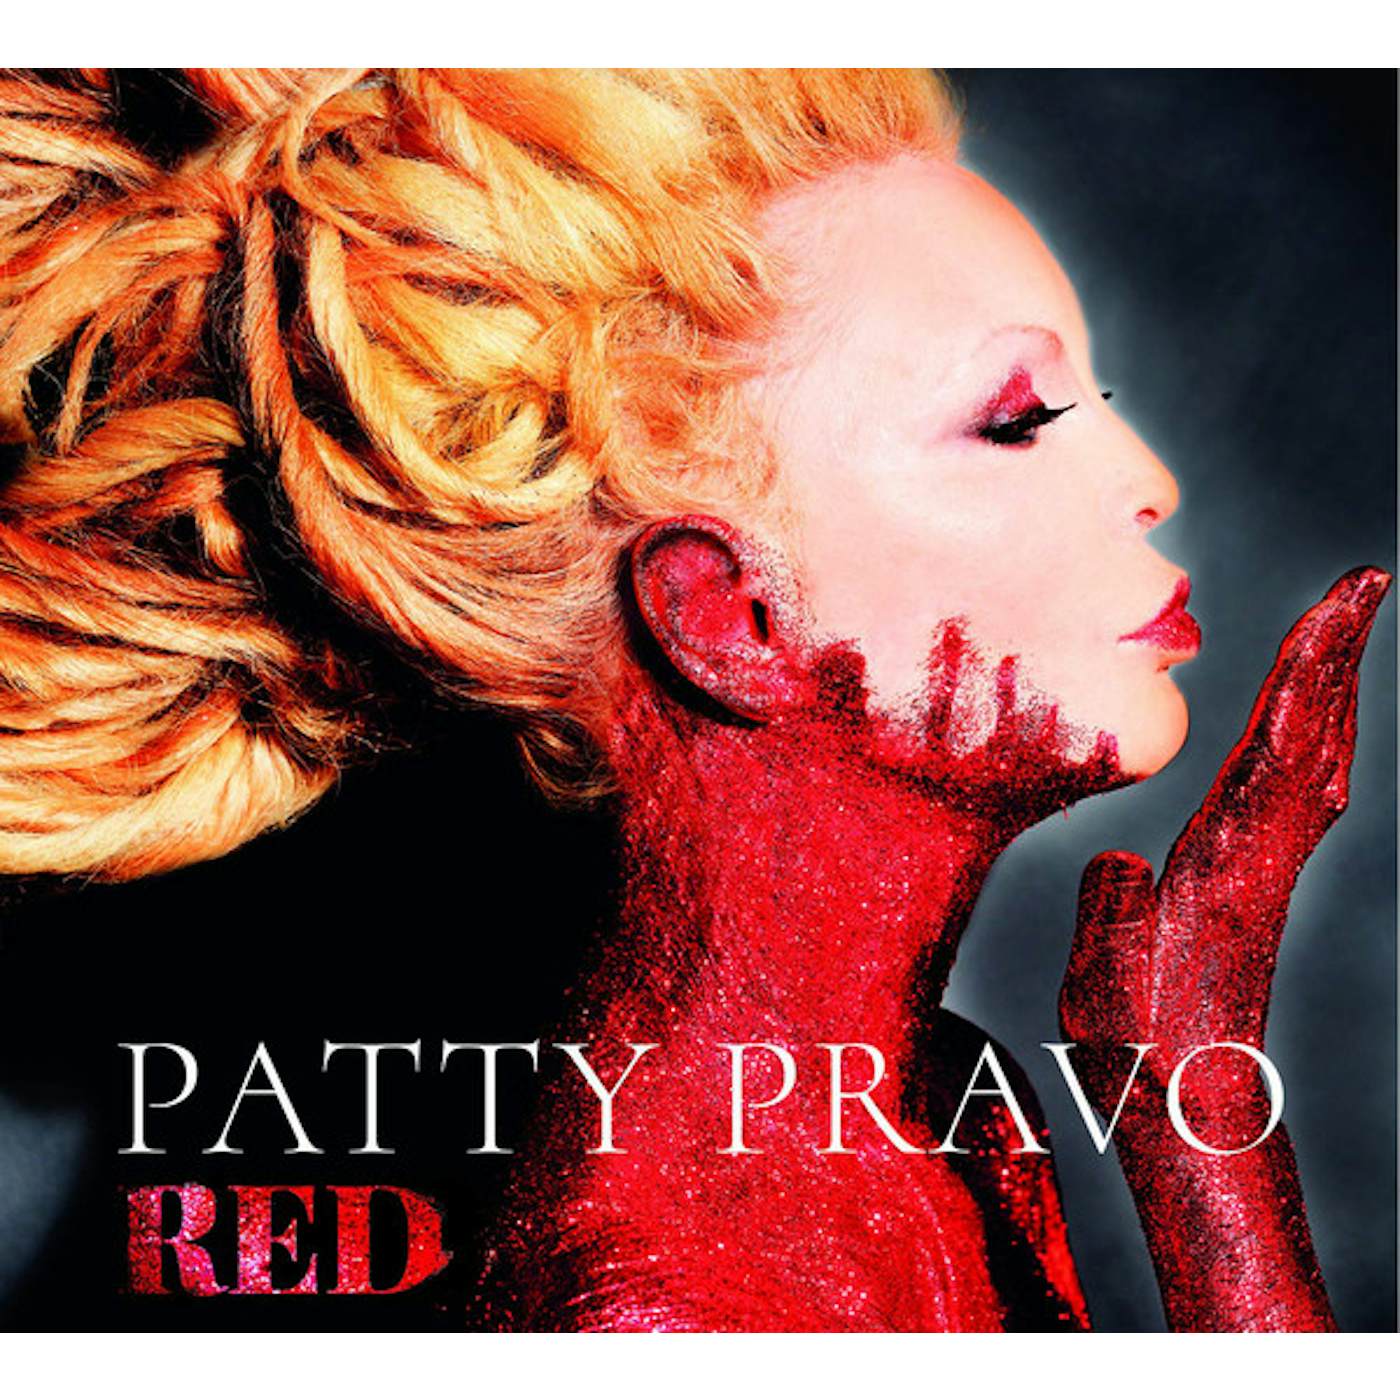 Patty Pravo Red Vinyl Record